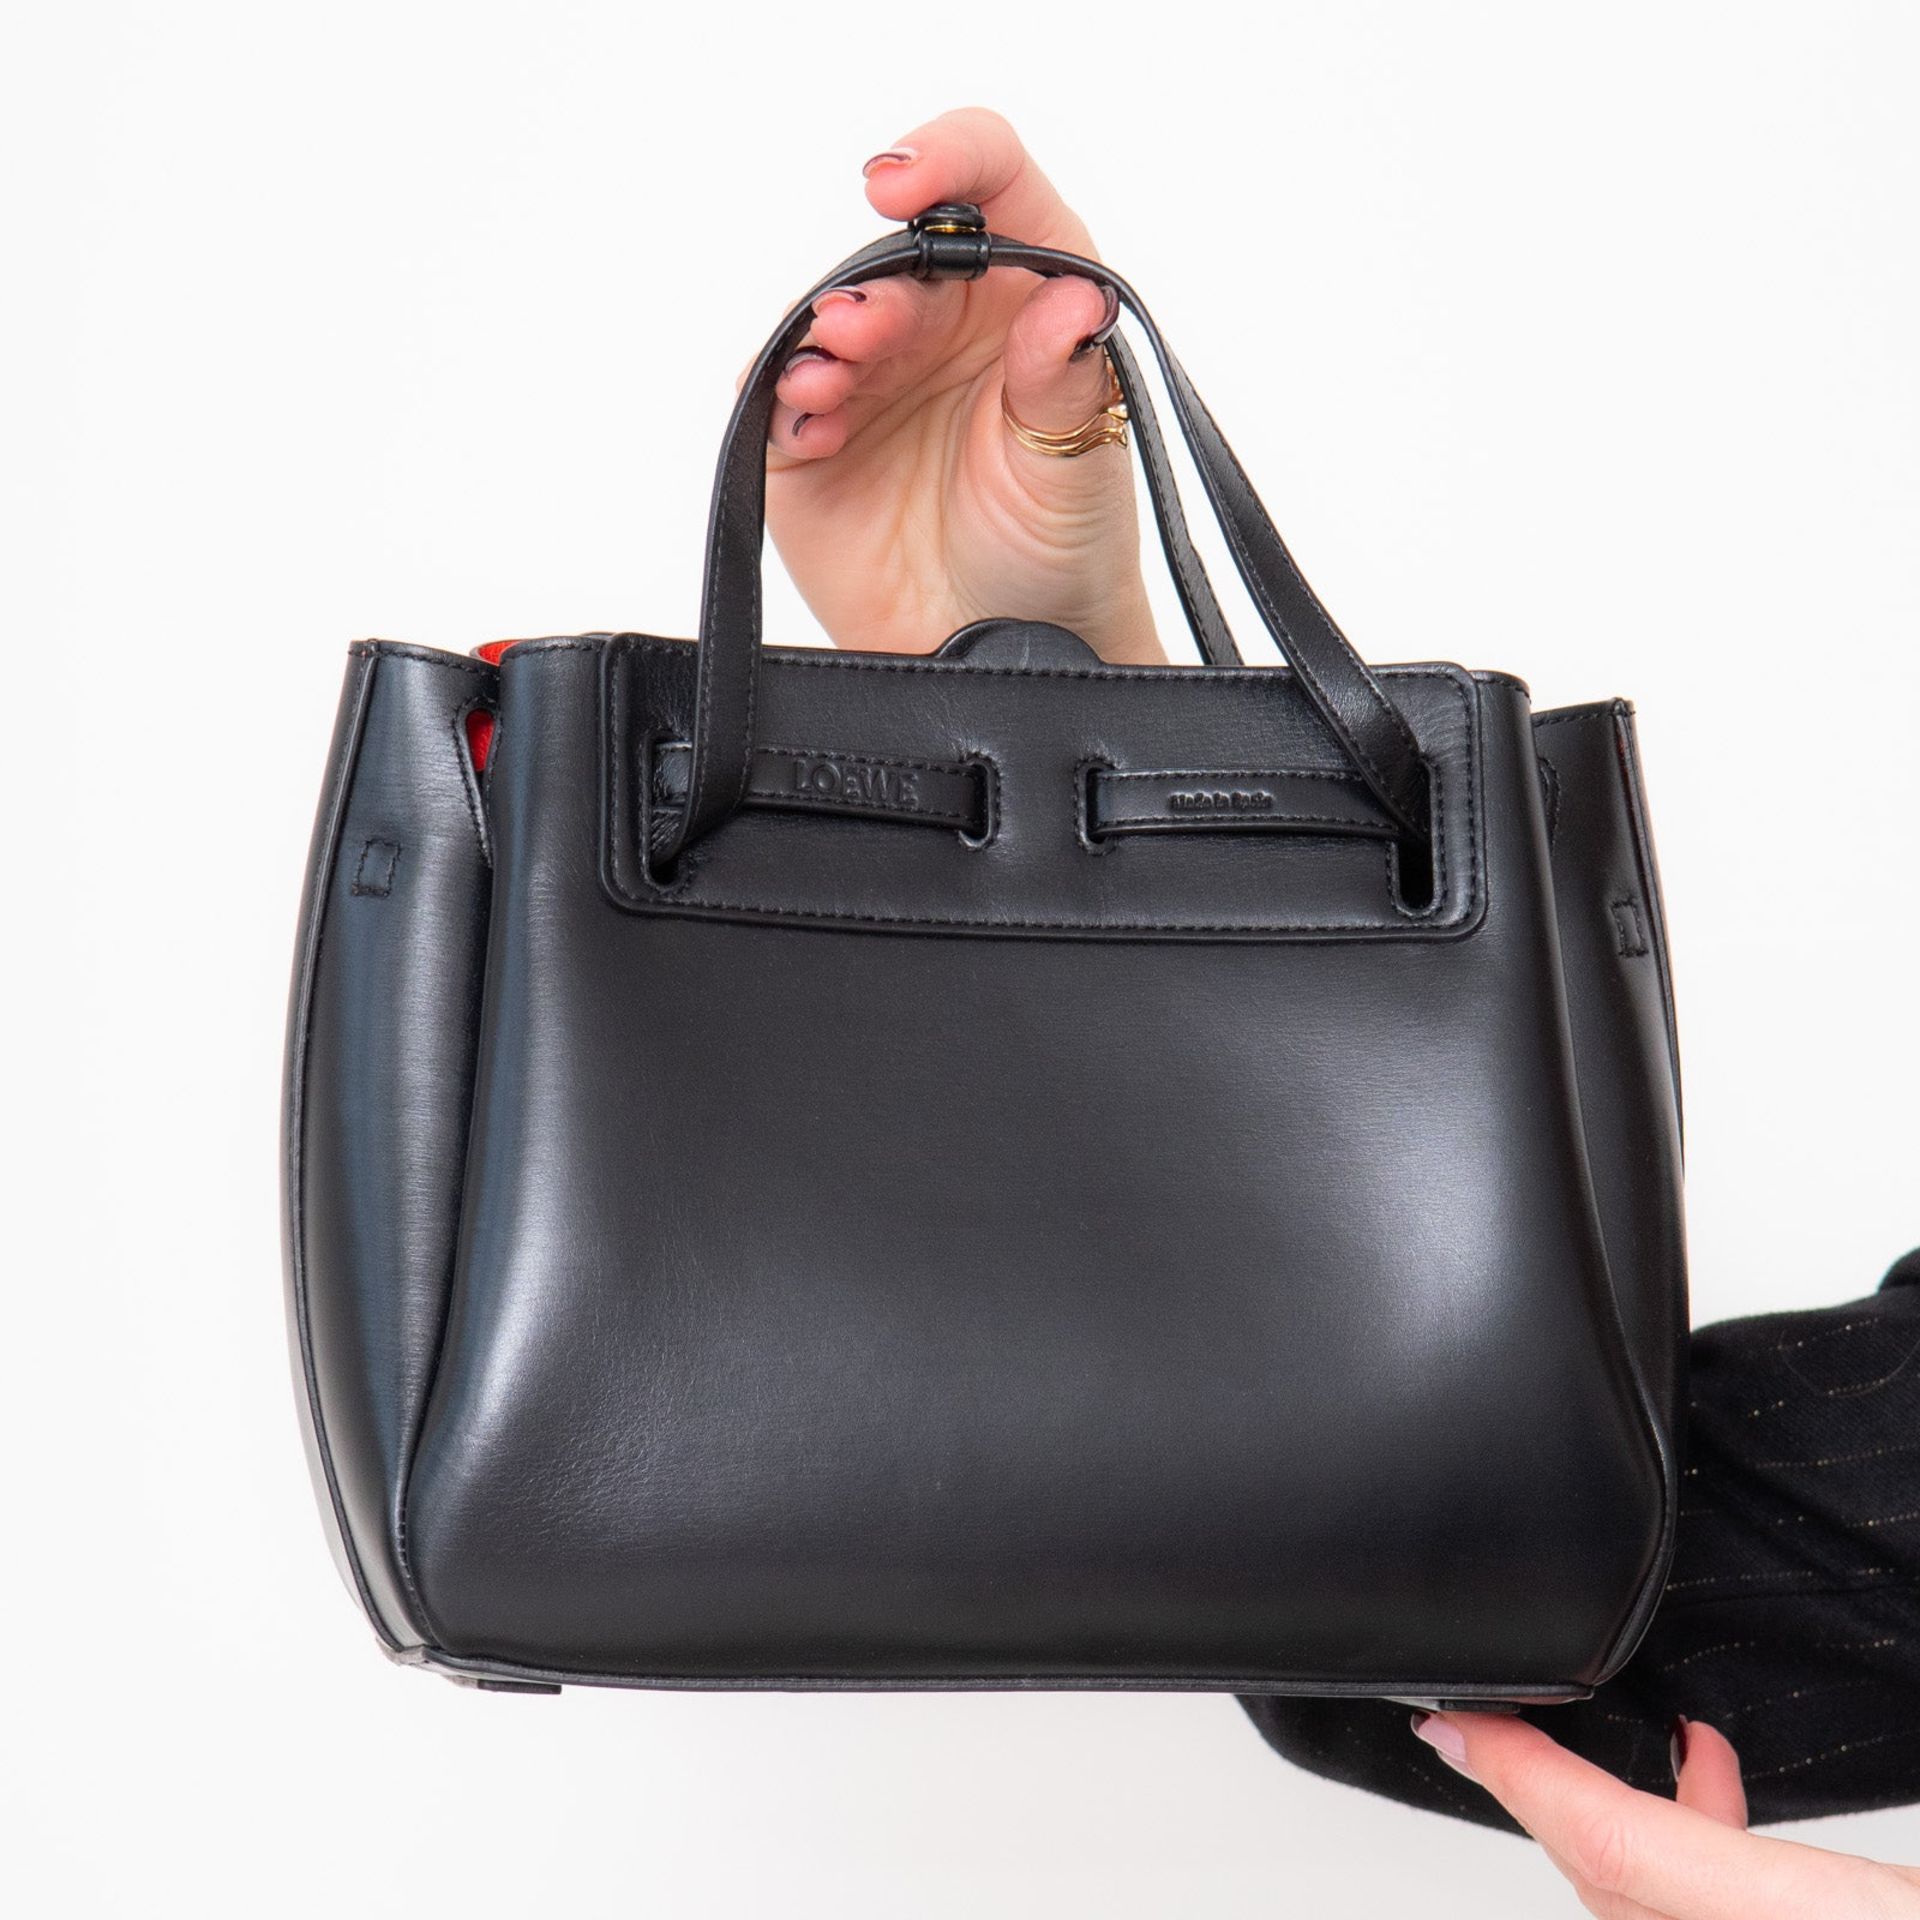 Loewe Lazo Black Leather Bag - Image 4 of 9